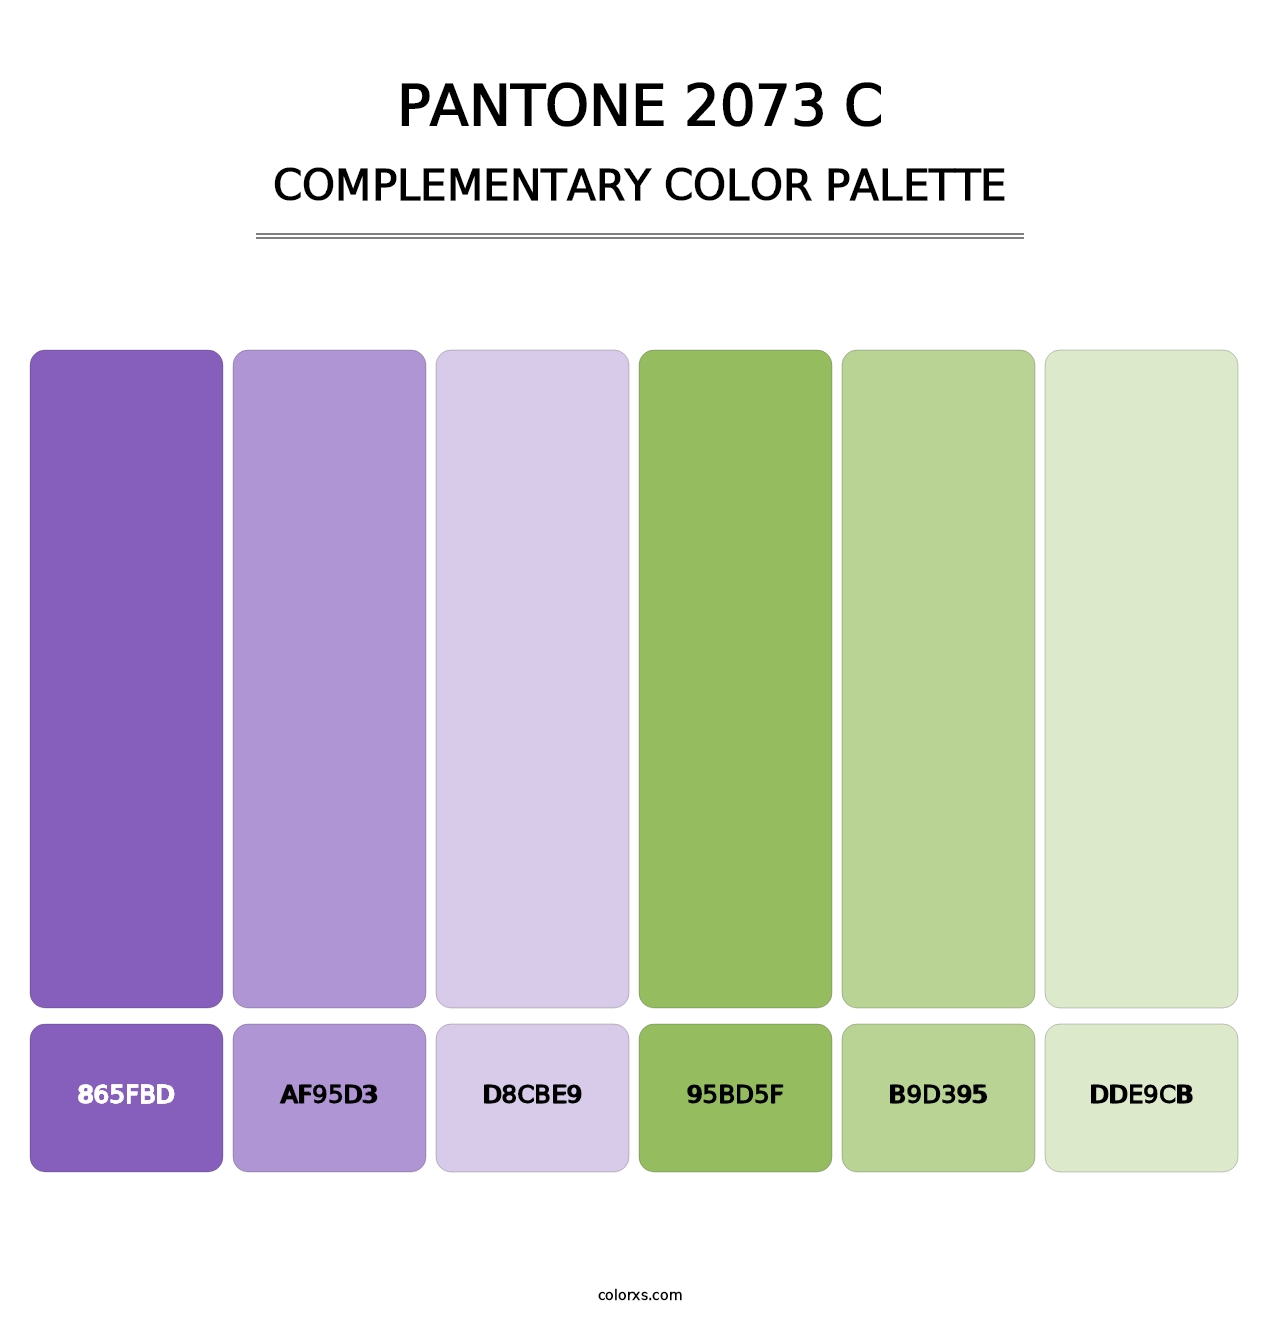 PANTONE 2073 C - Complementary Color Palette